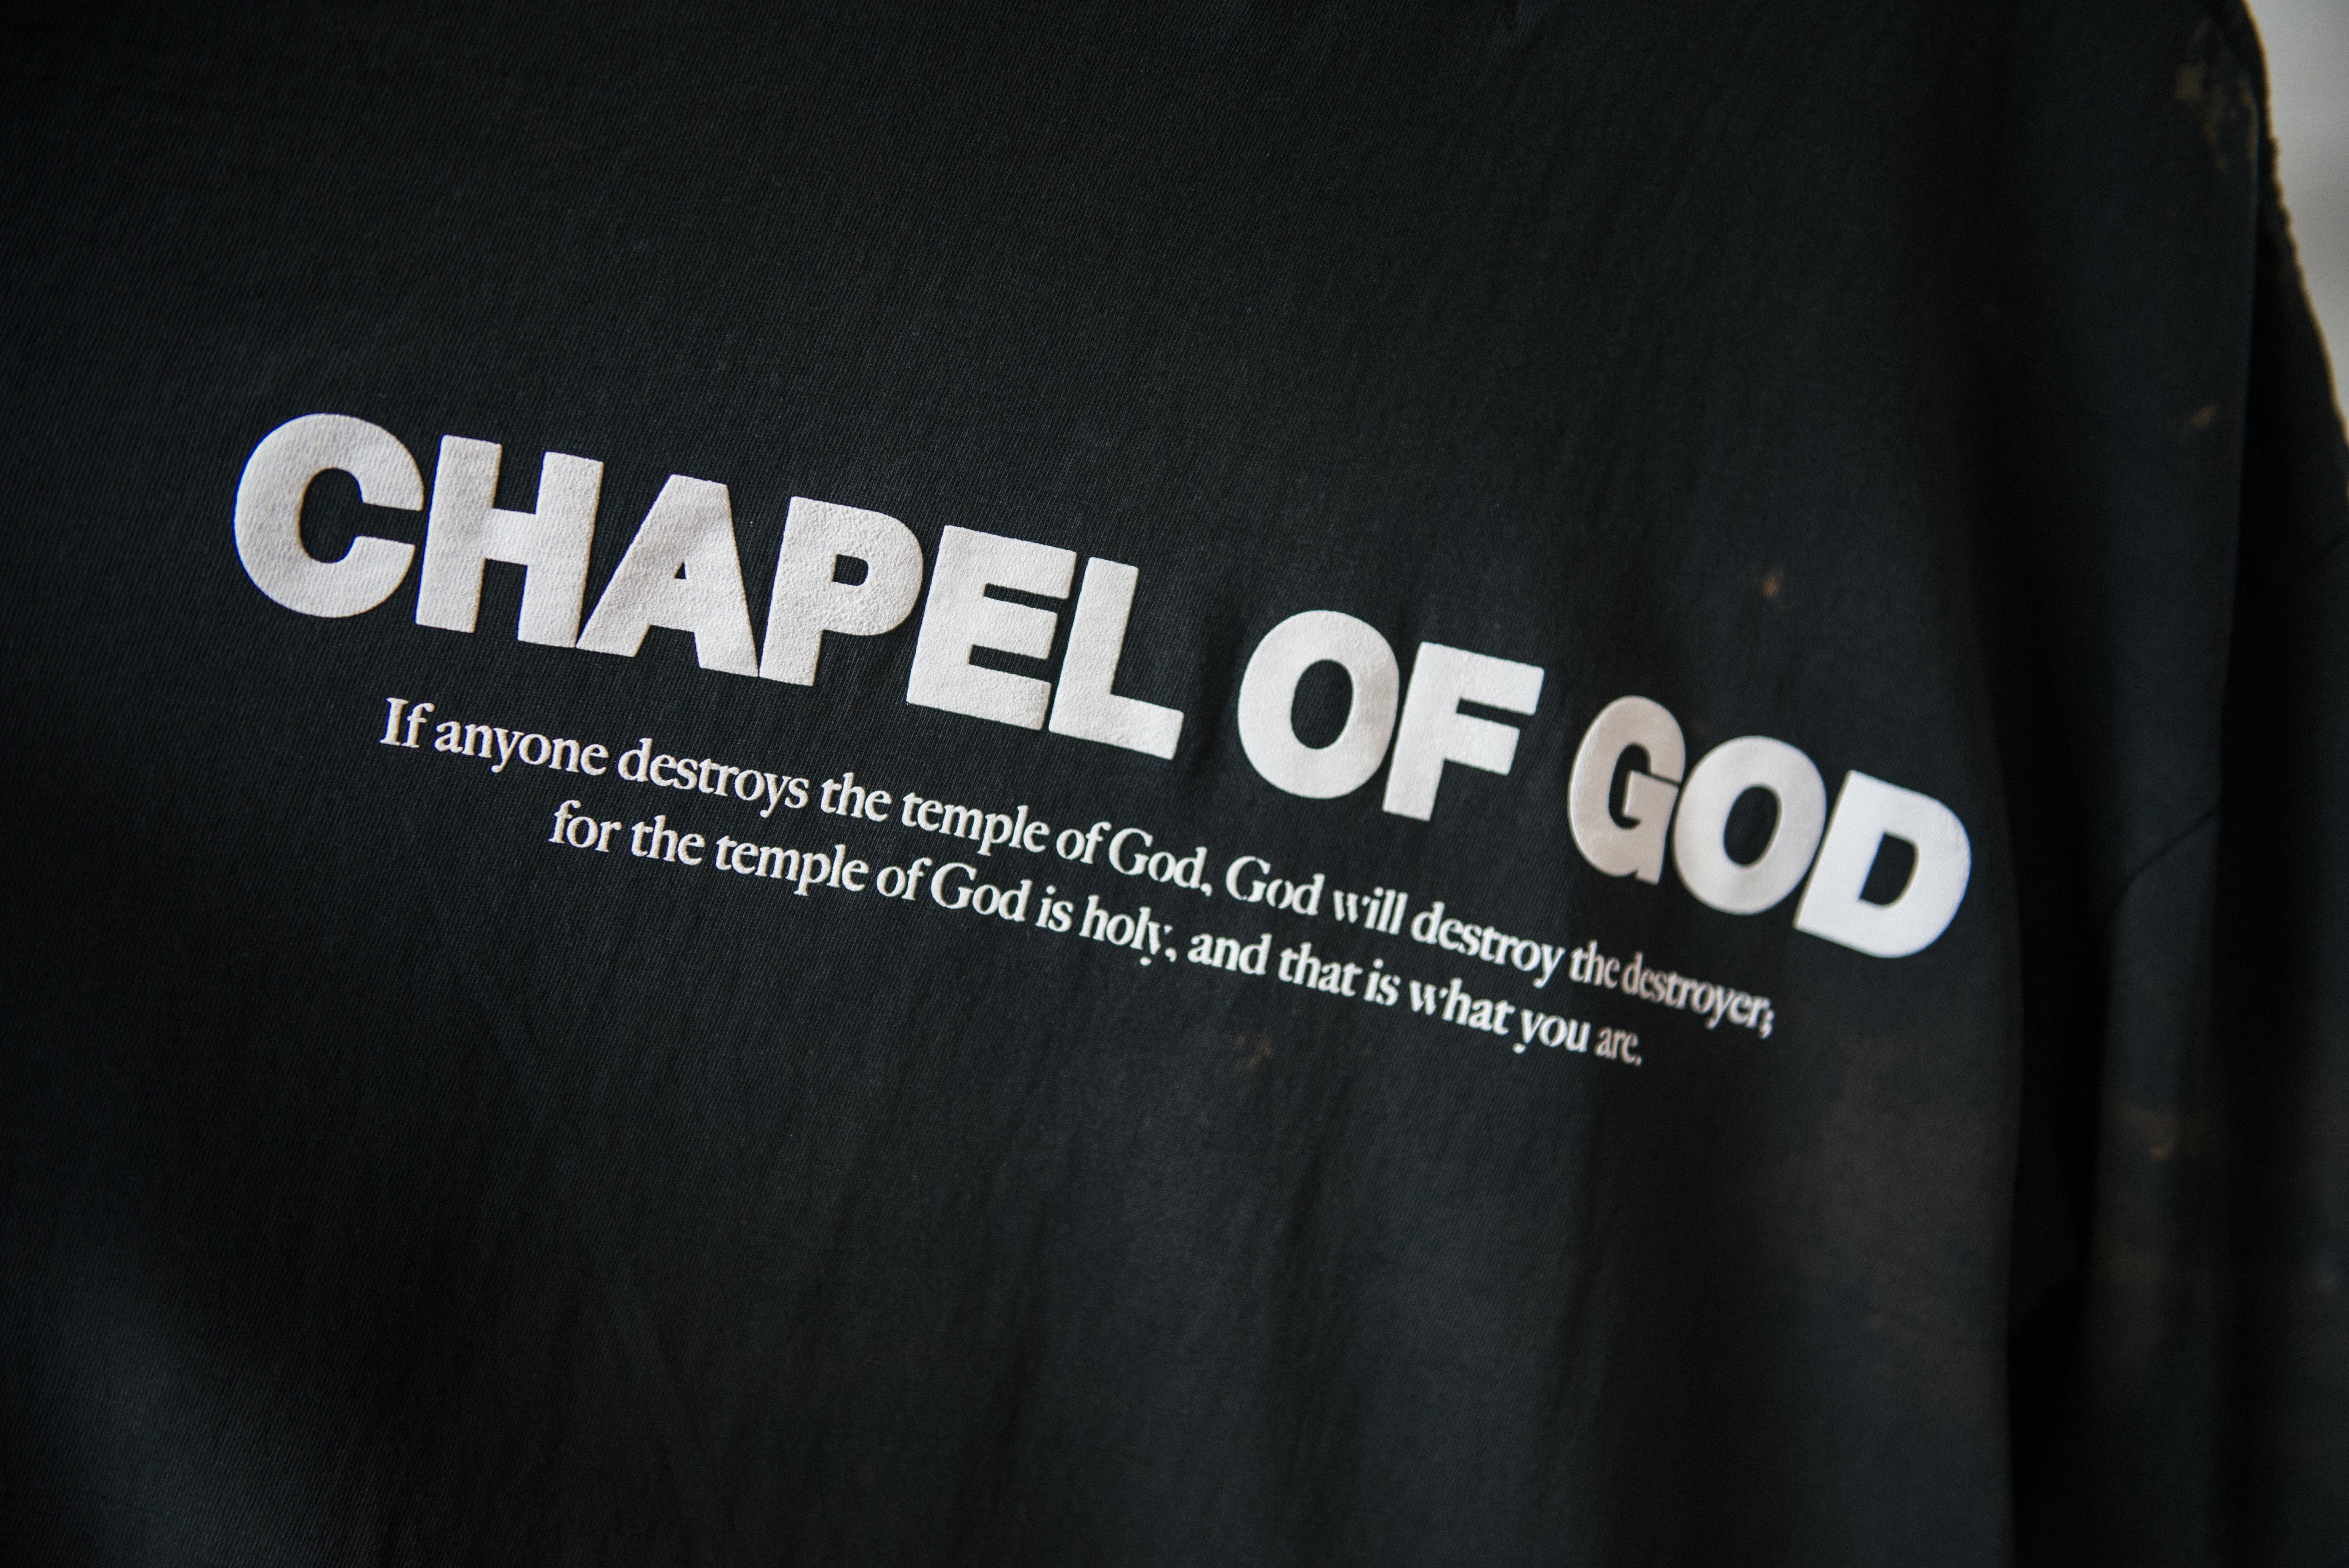 Fear of God Clothing Logo - Fear of God x Chapel NYC “Chapel of God” release at Maxfield LA